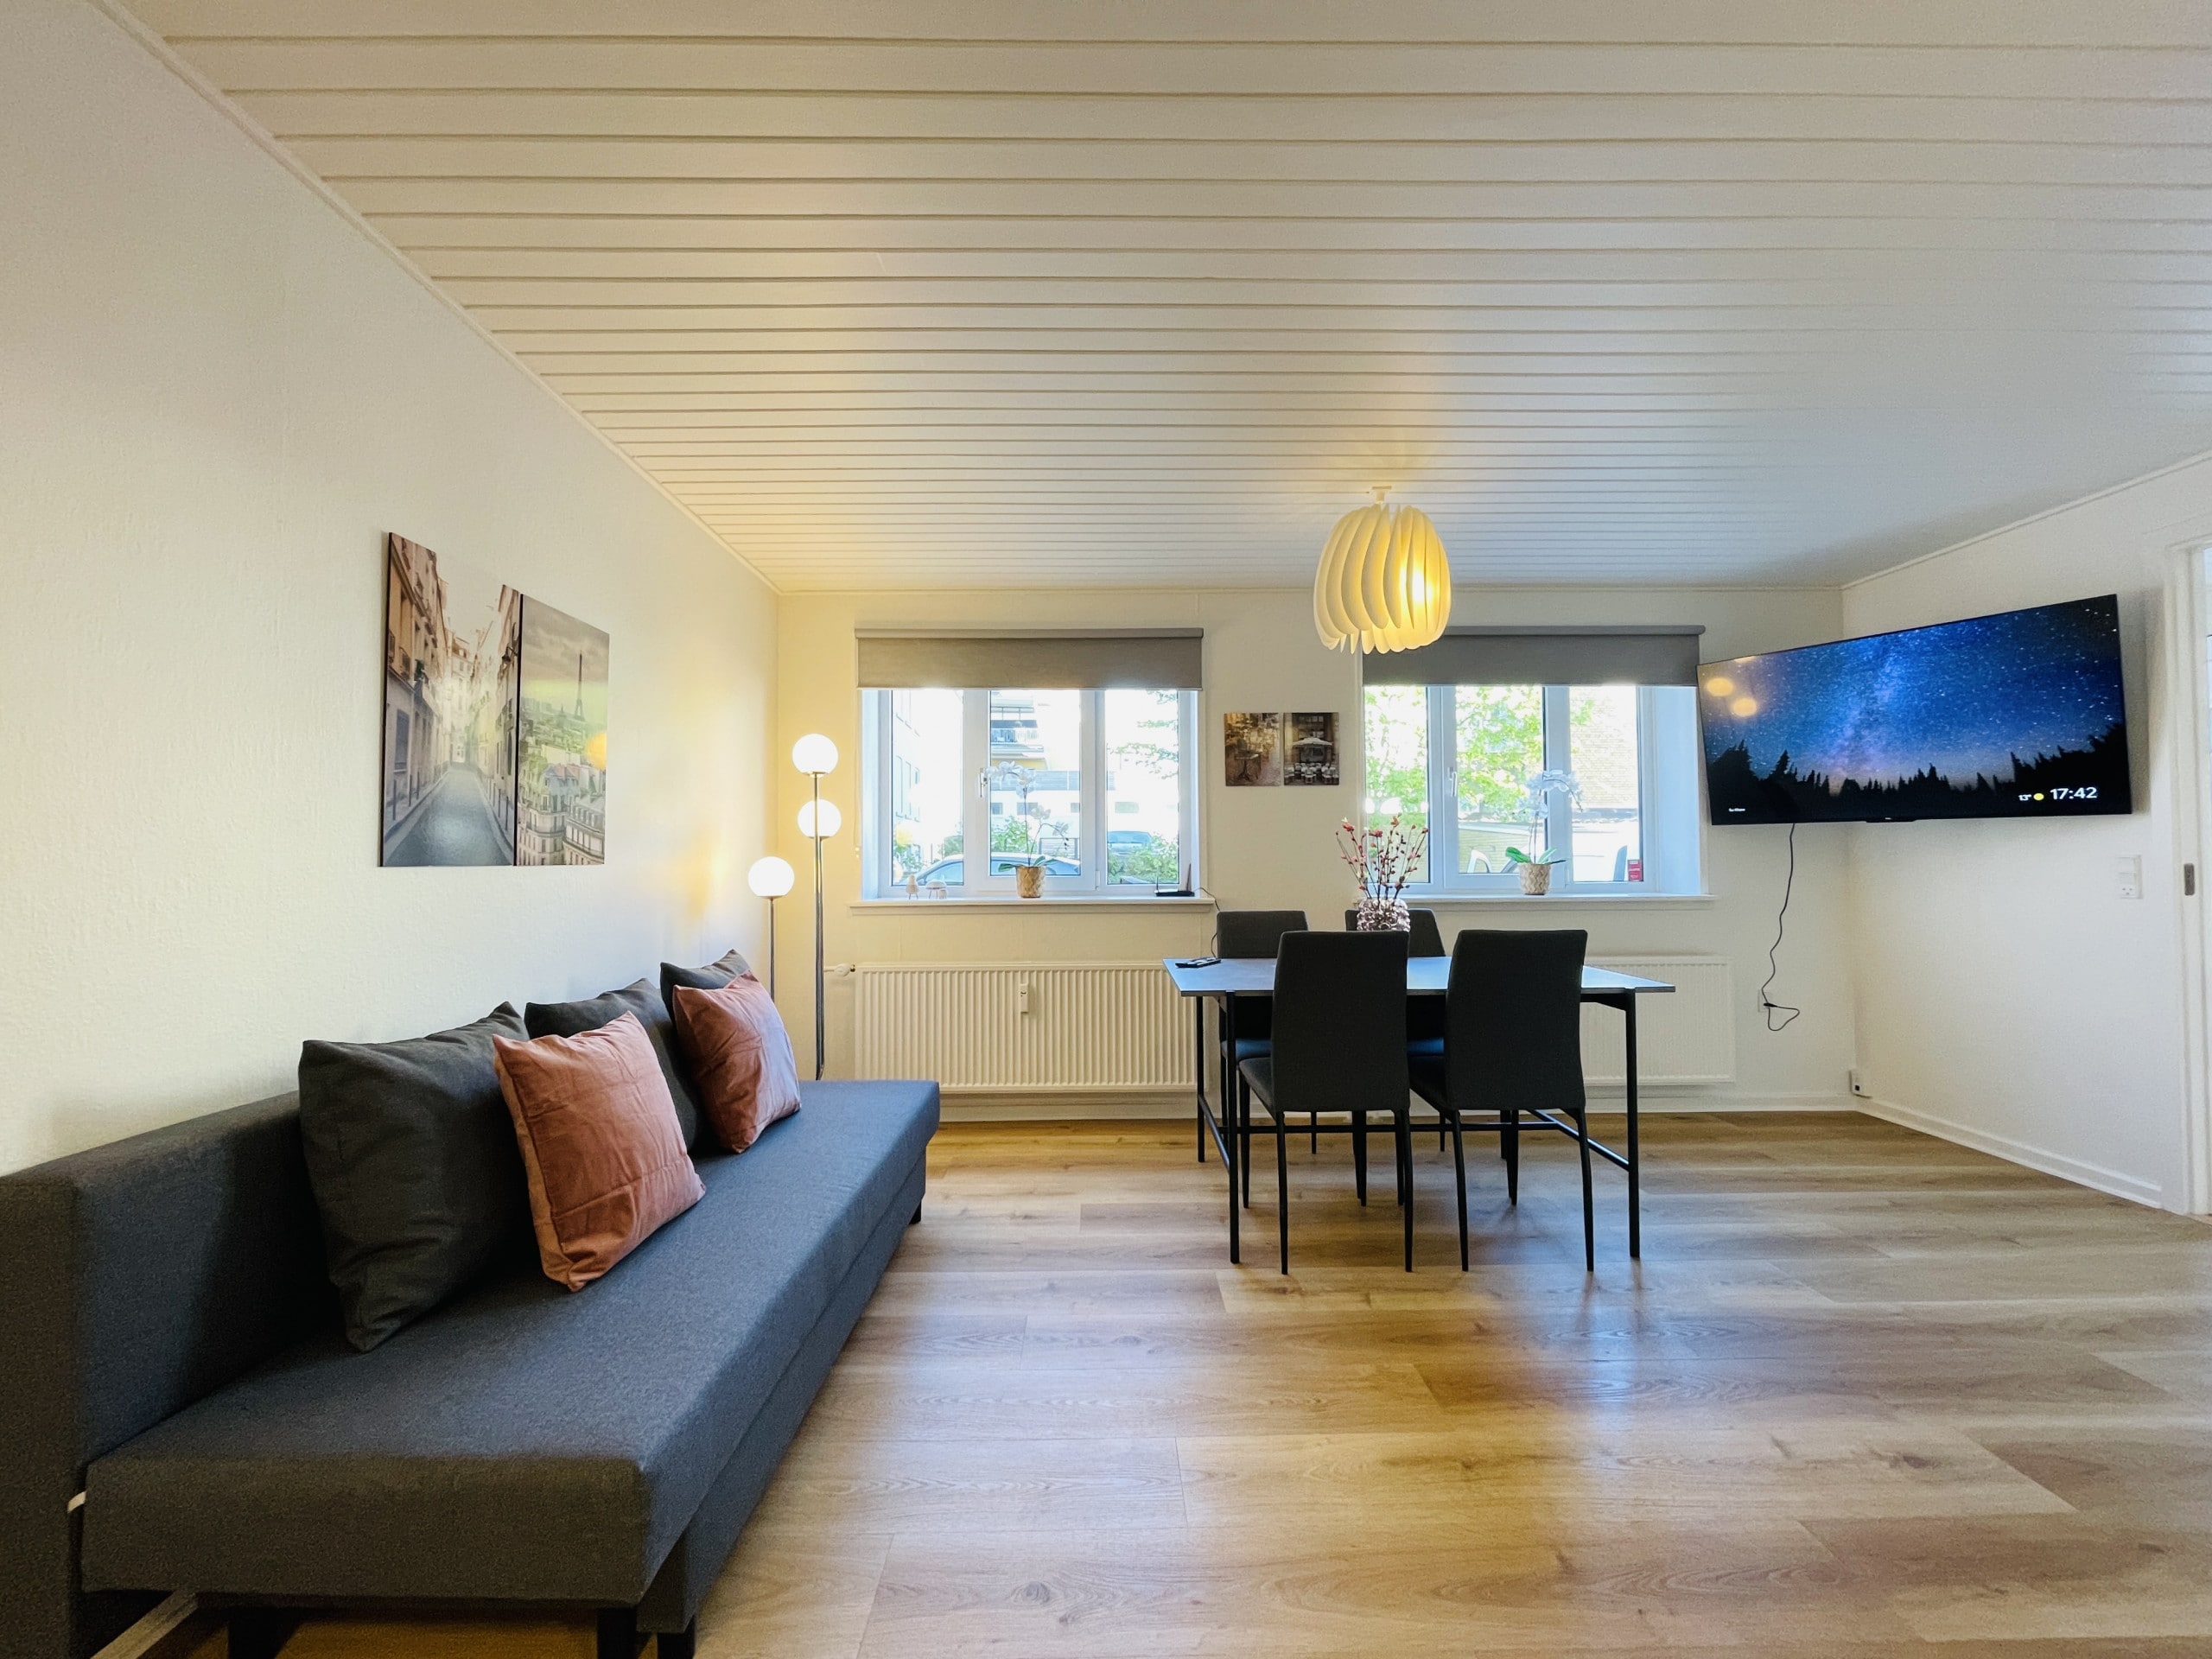 aday - Modern 2 Bedroom Apartment on the Pedestrian Street in Frederikshavn